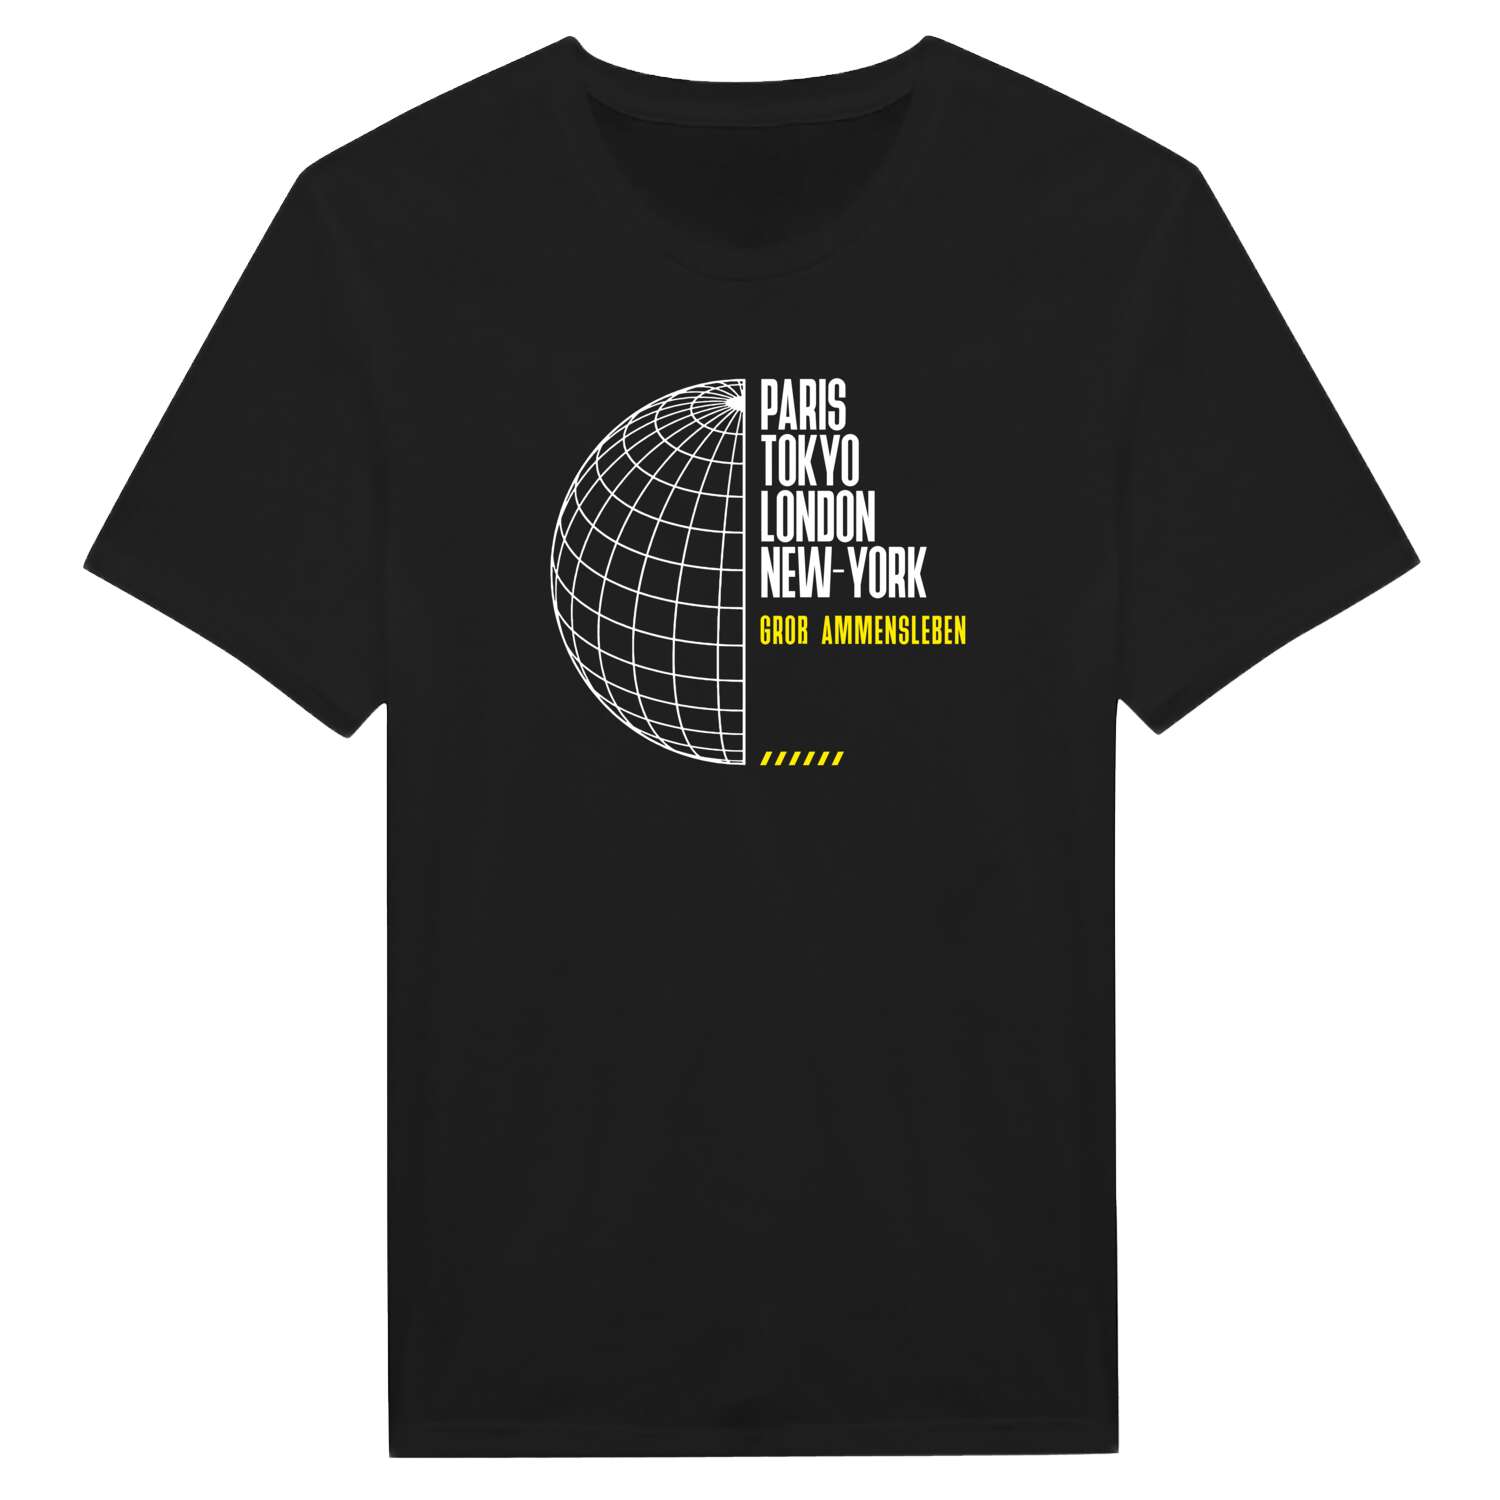 Groß Ammensleben T-Shirt »Paris Tokyo London«